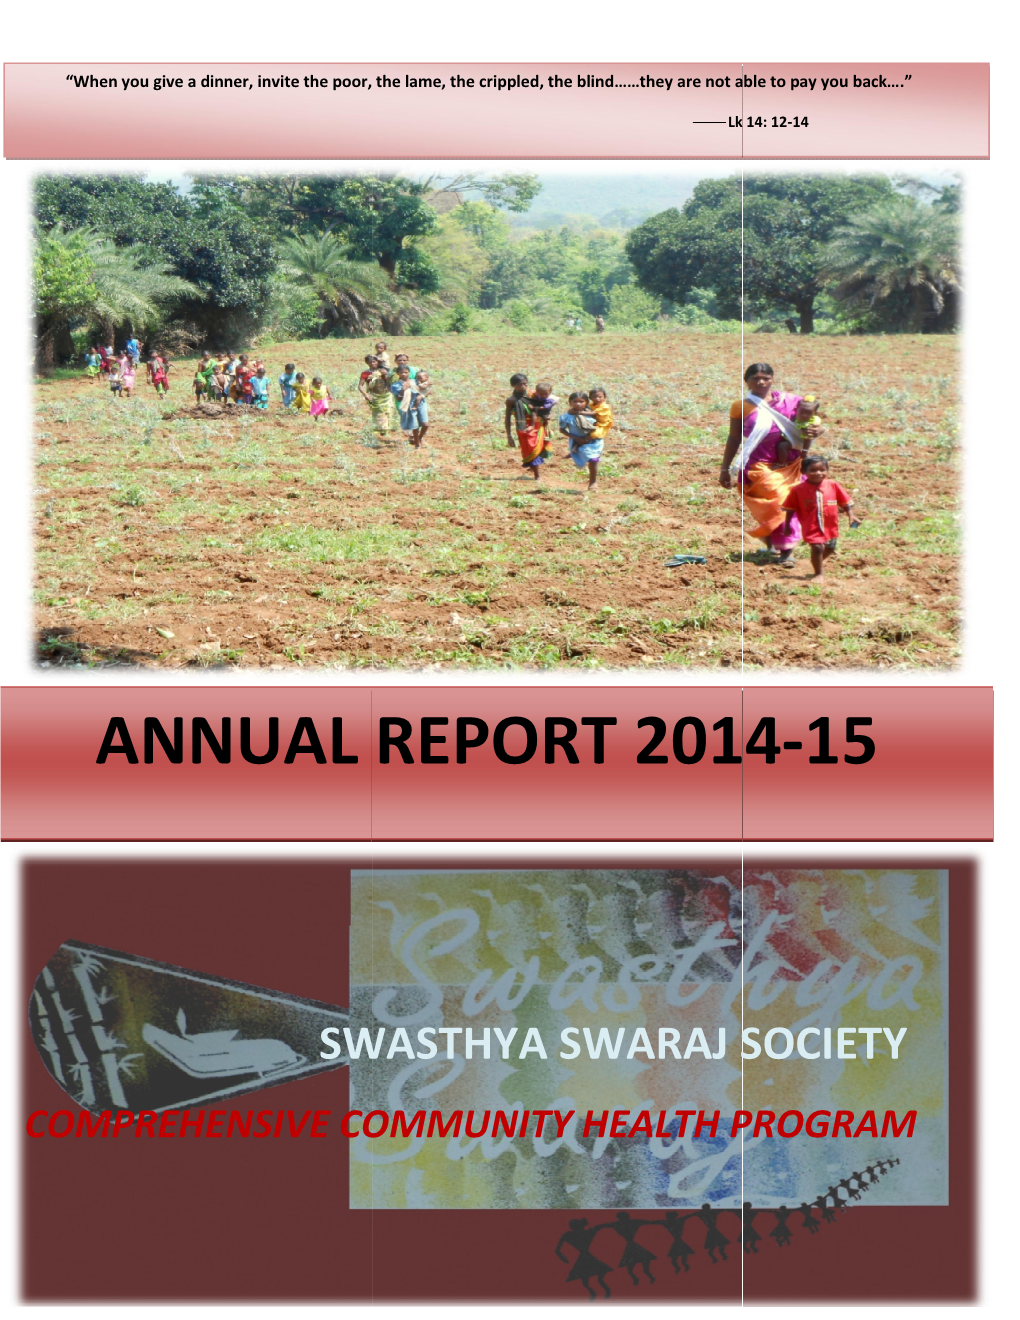 Annual Report 201 Annual Report 2014 Eport 2014-15